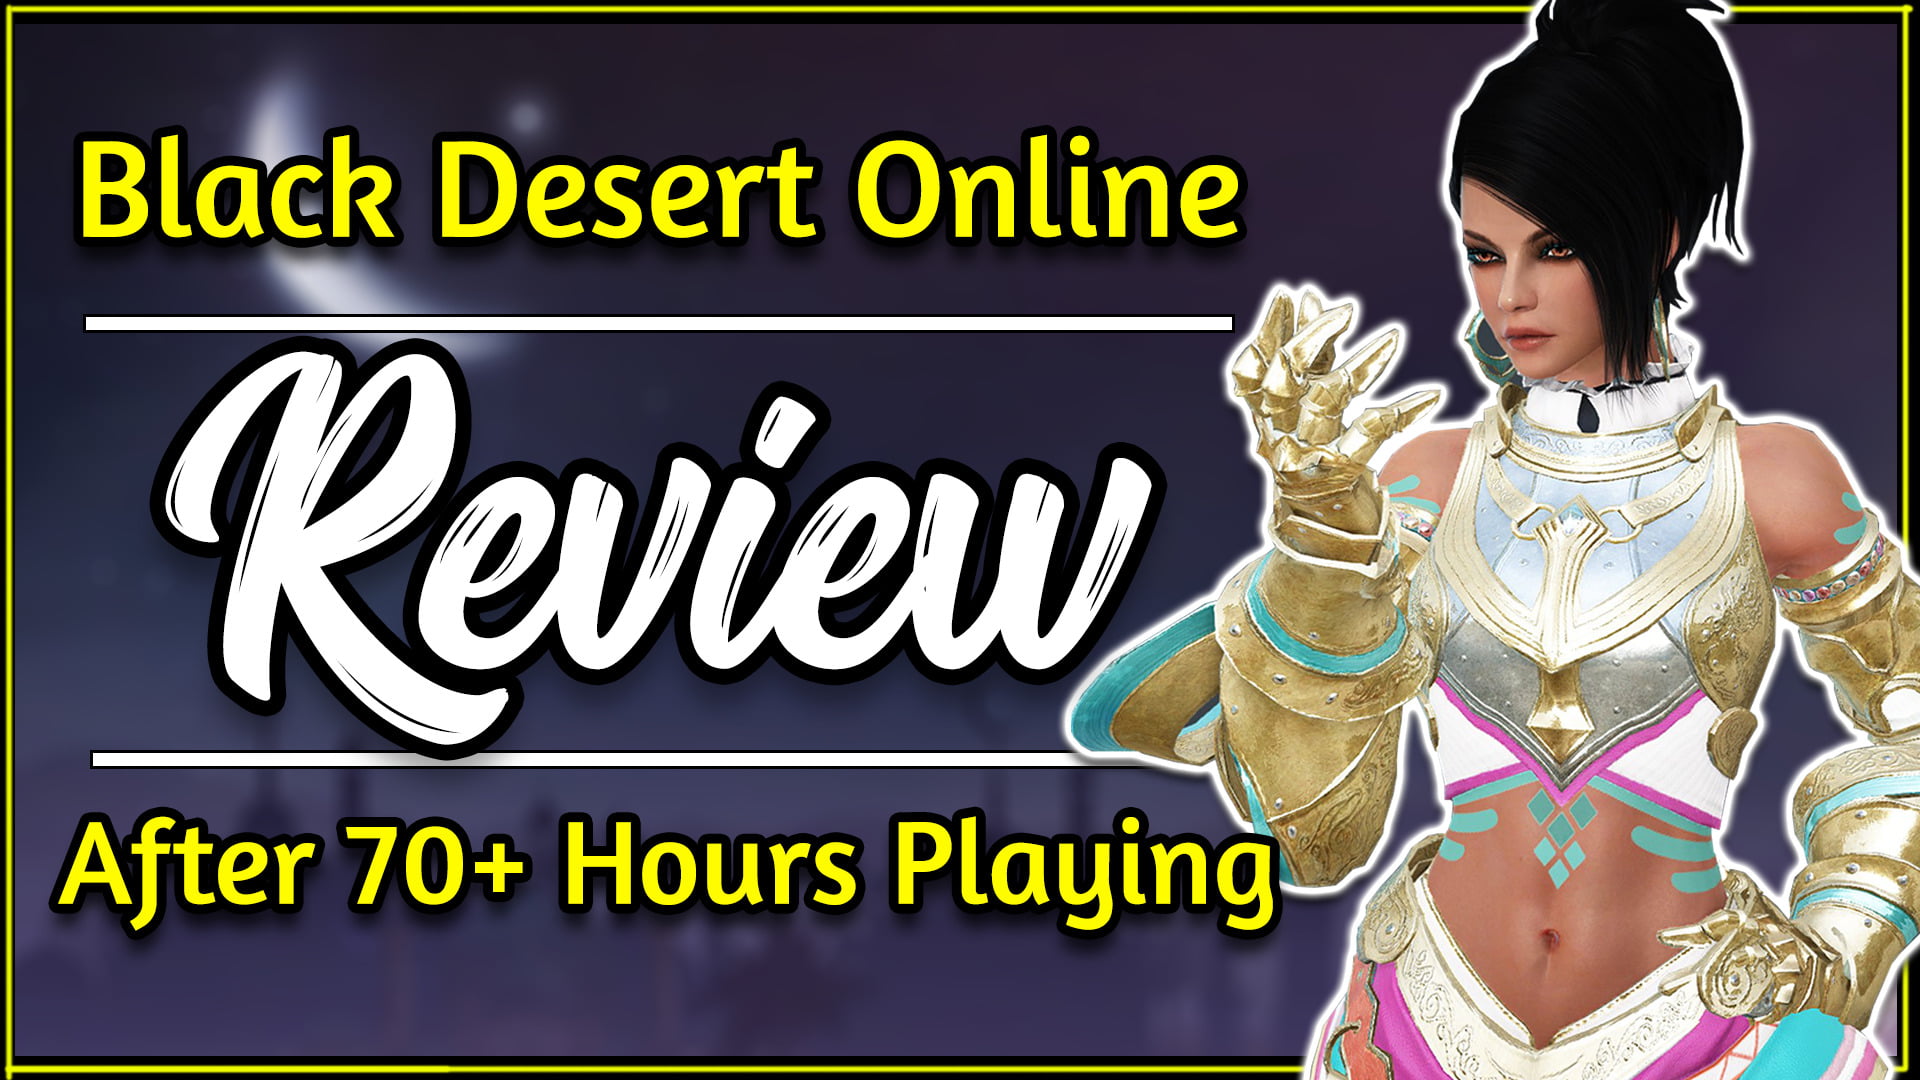 Black Desert Online Review - GameSpot